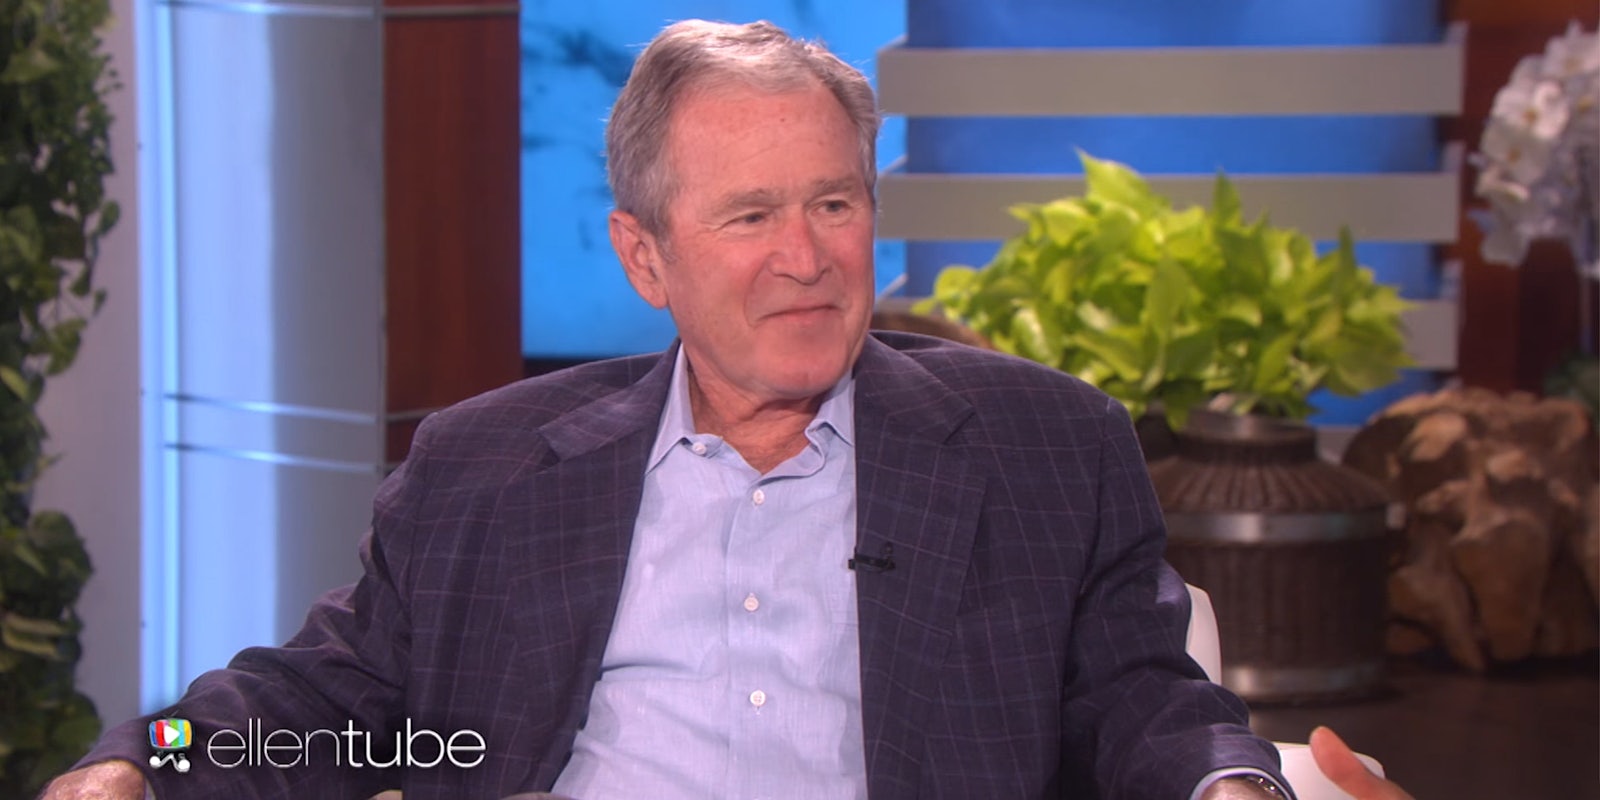 George W Bush on Ellen